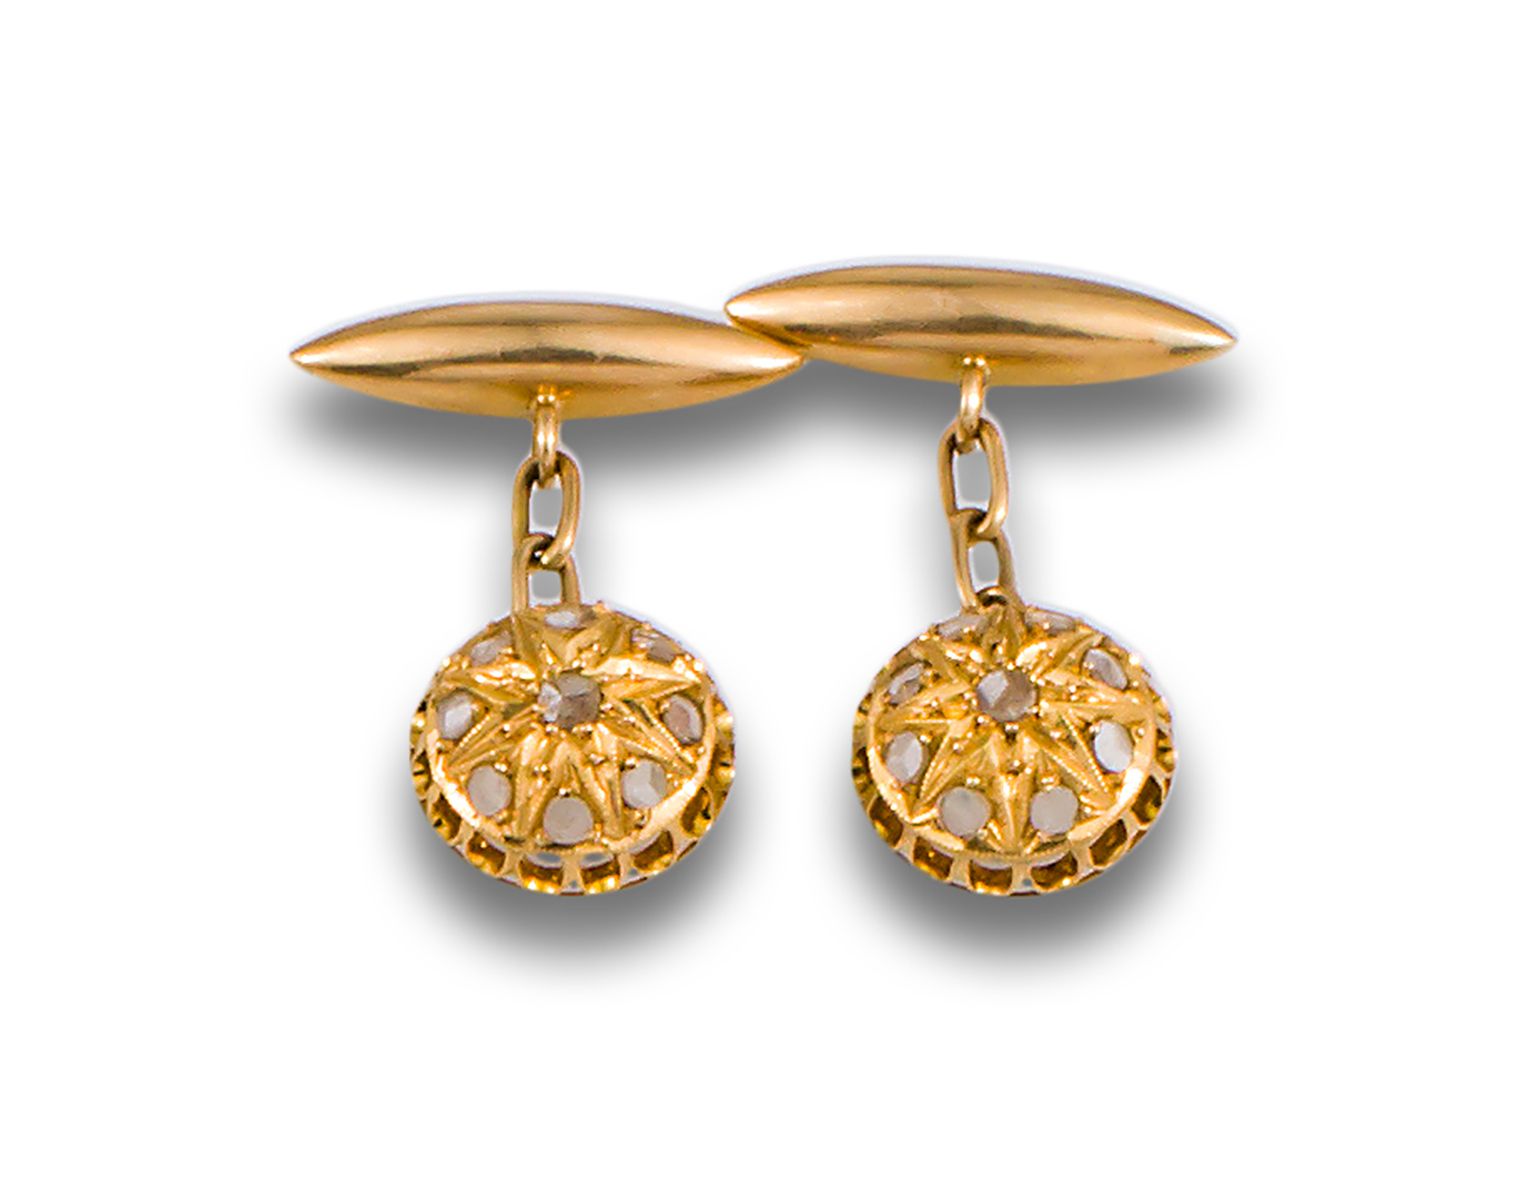 ANTIQUE CUFFLINKS, YELLOW GOLD, AND DIAMONDS 18K黄金镶玫瑰式切割钻石的古董charro袖扣......。